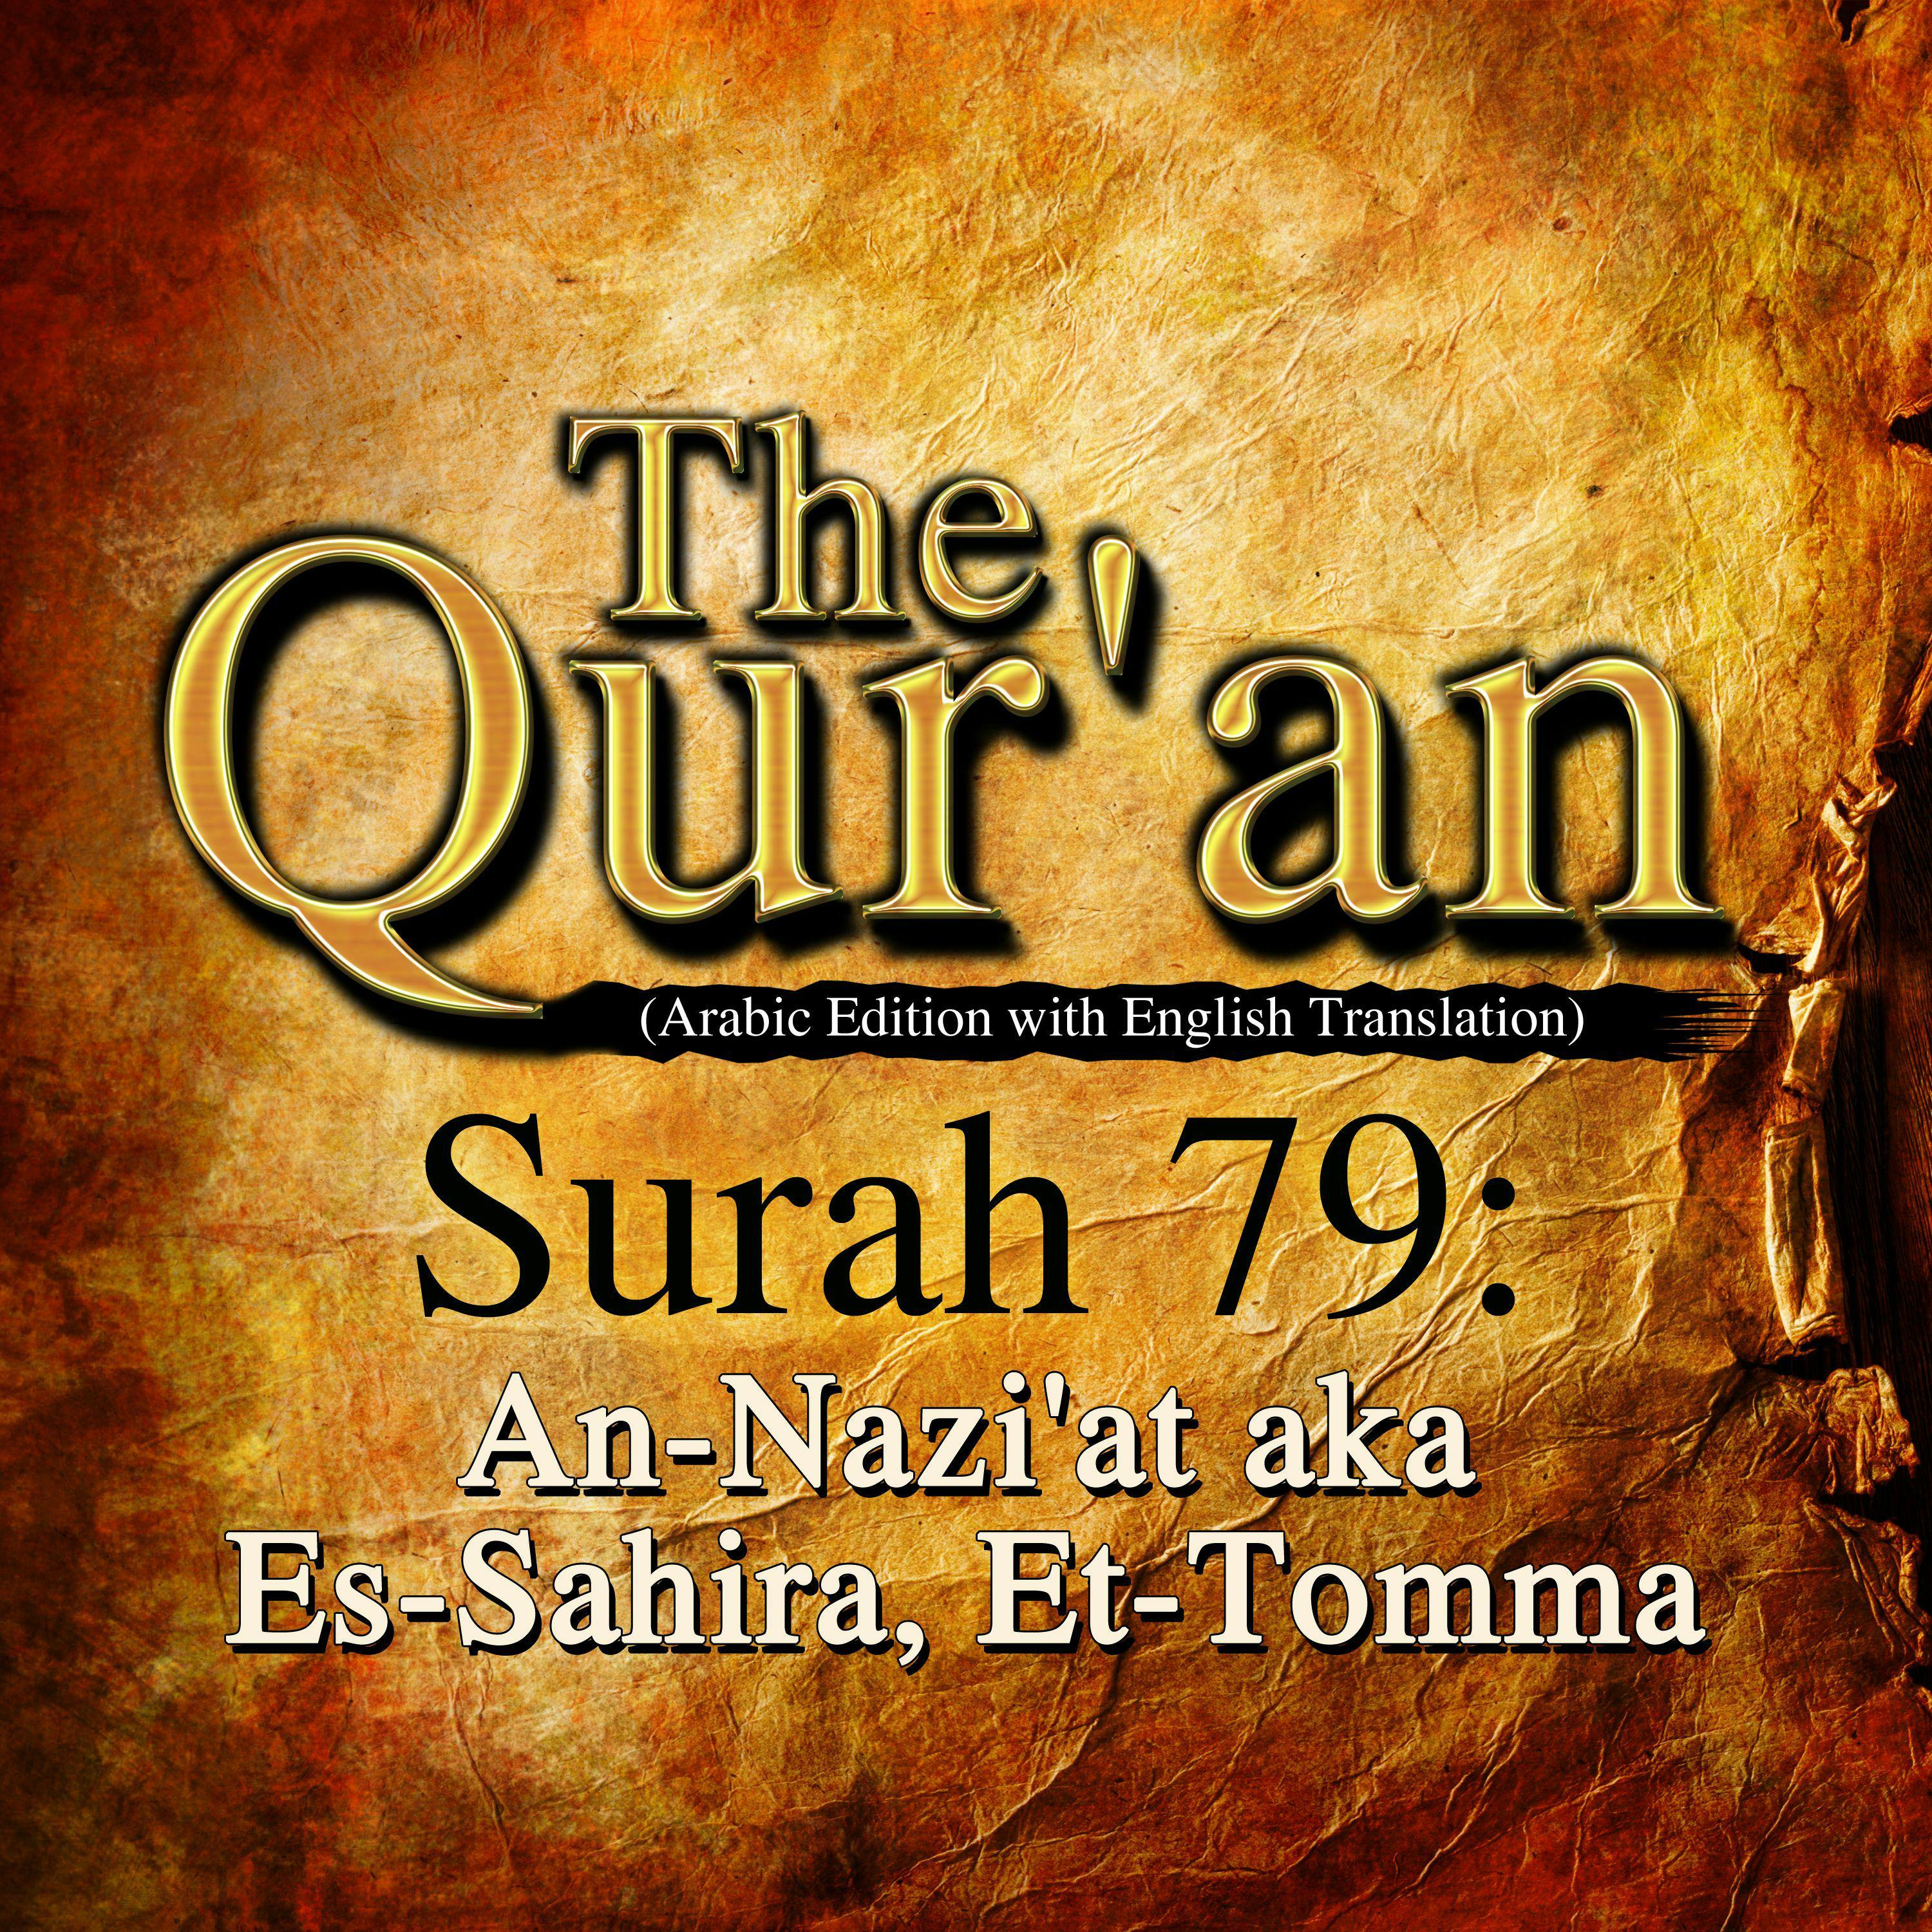 The Qur'an: Surah 79: An-Nazi'at, aka Es-Sahira, Et-Tomma - undefined